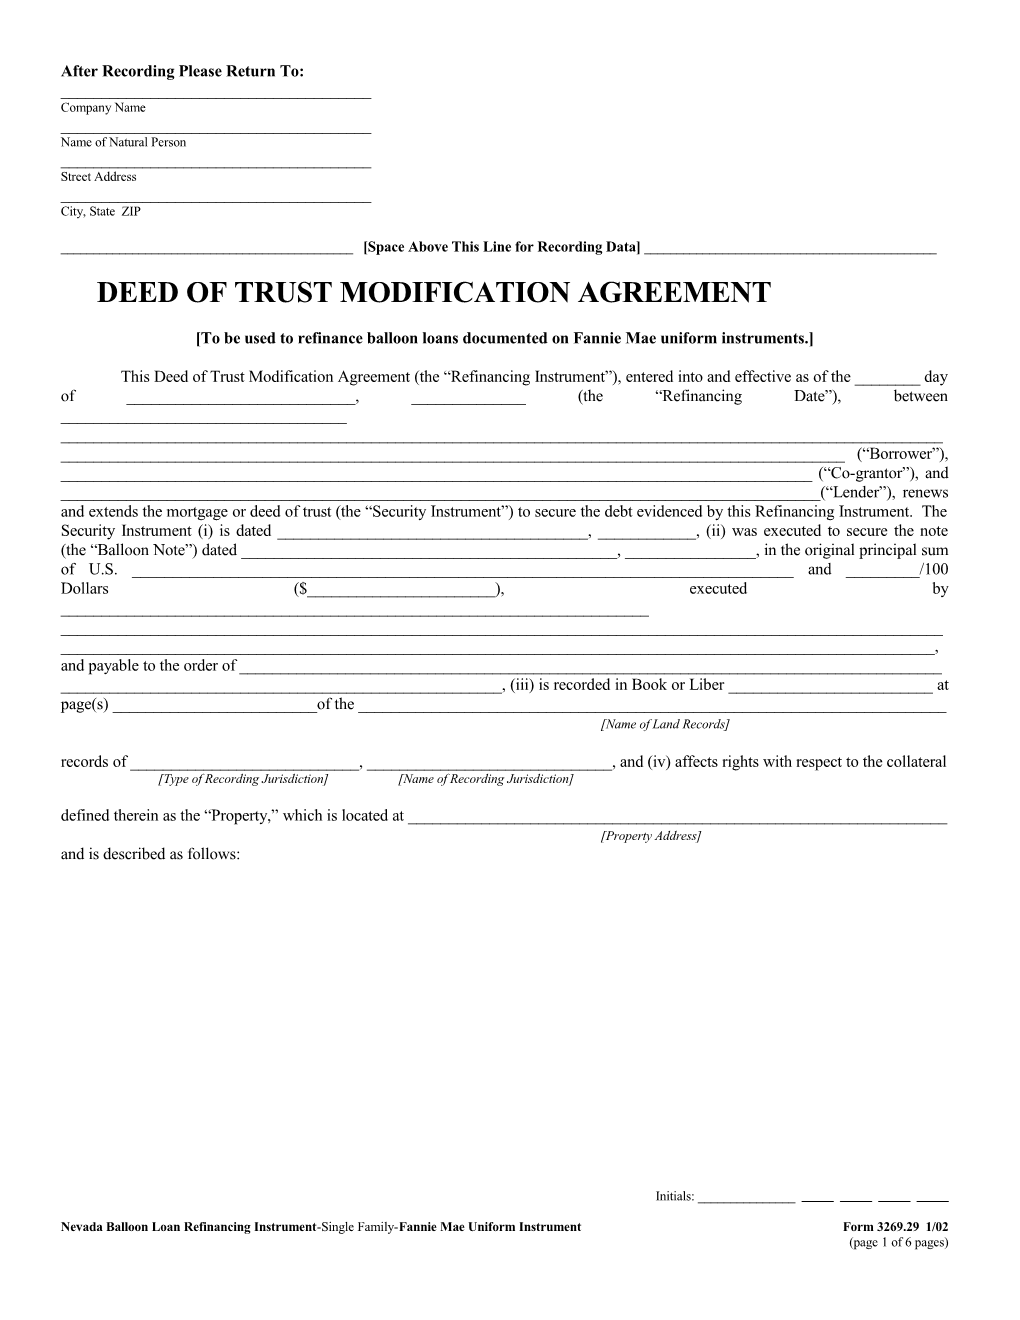 Nevada Balloon Loan Refinancing Instrument (Form 3269.29): Word